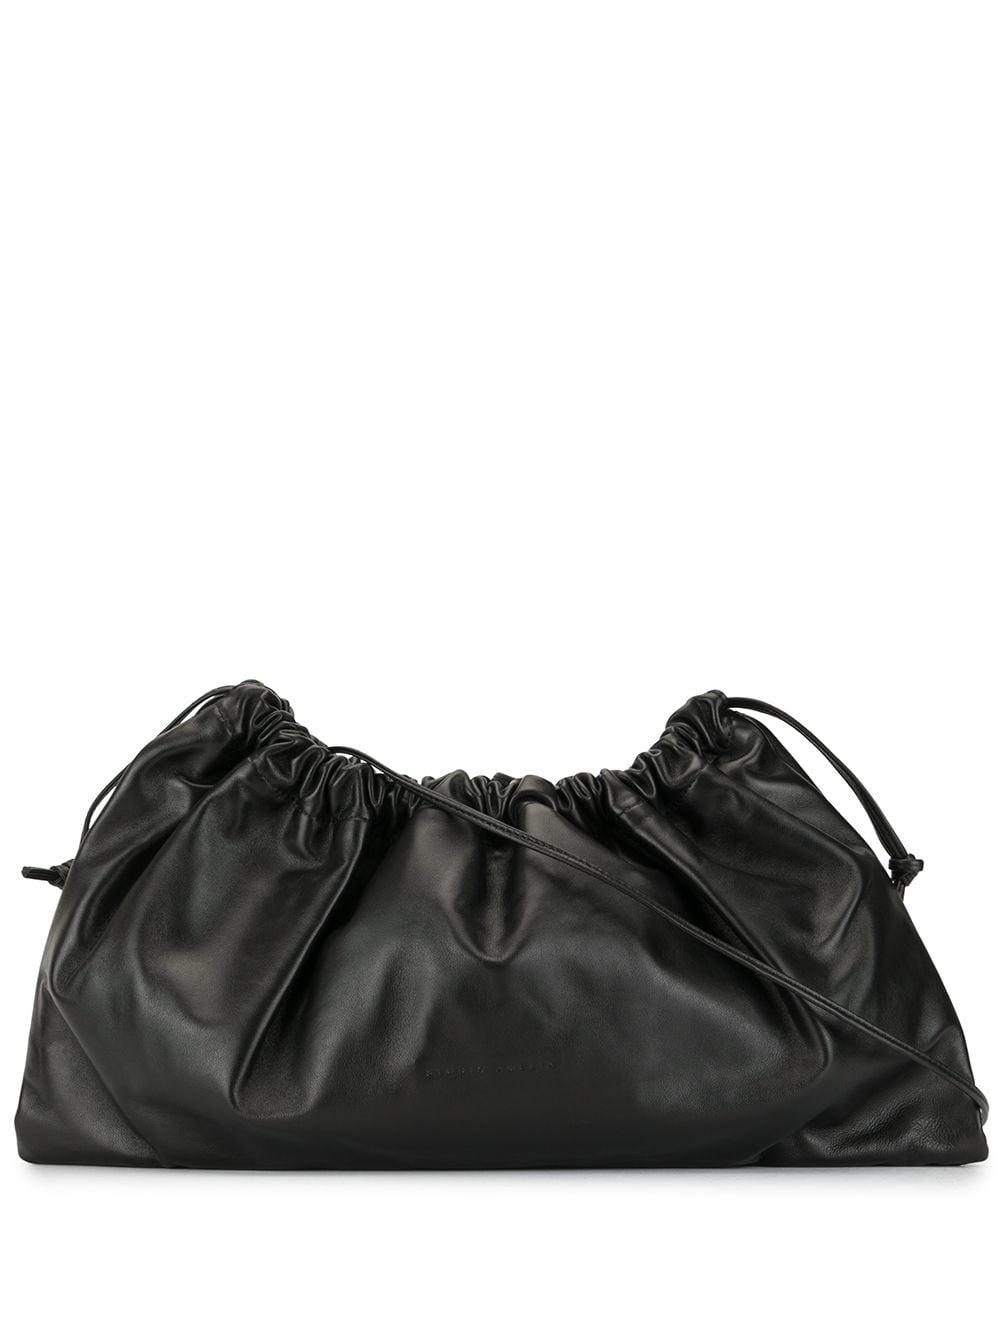 STUDIO AMELIA Leather 13 Clutch Bag in Black - Lyst